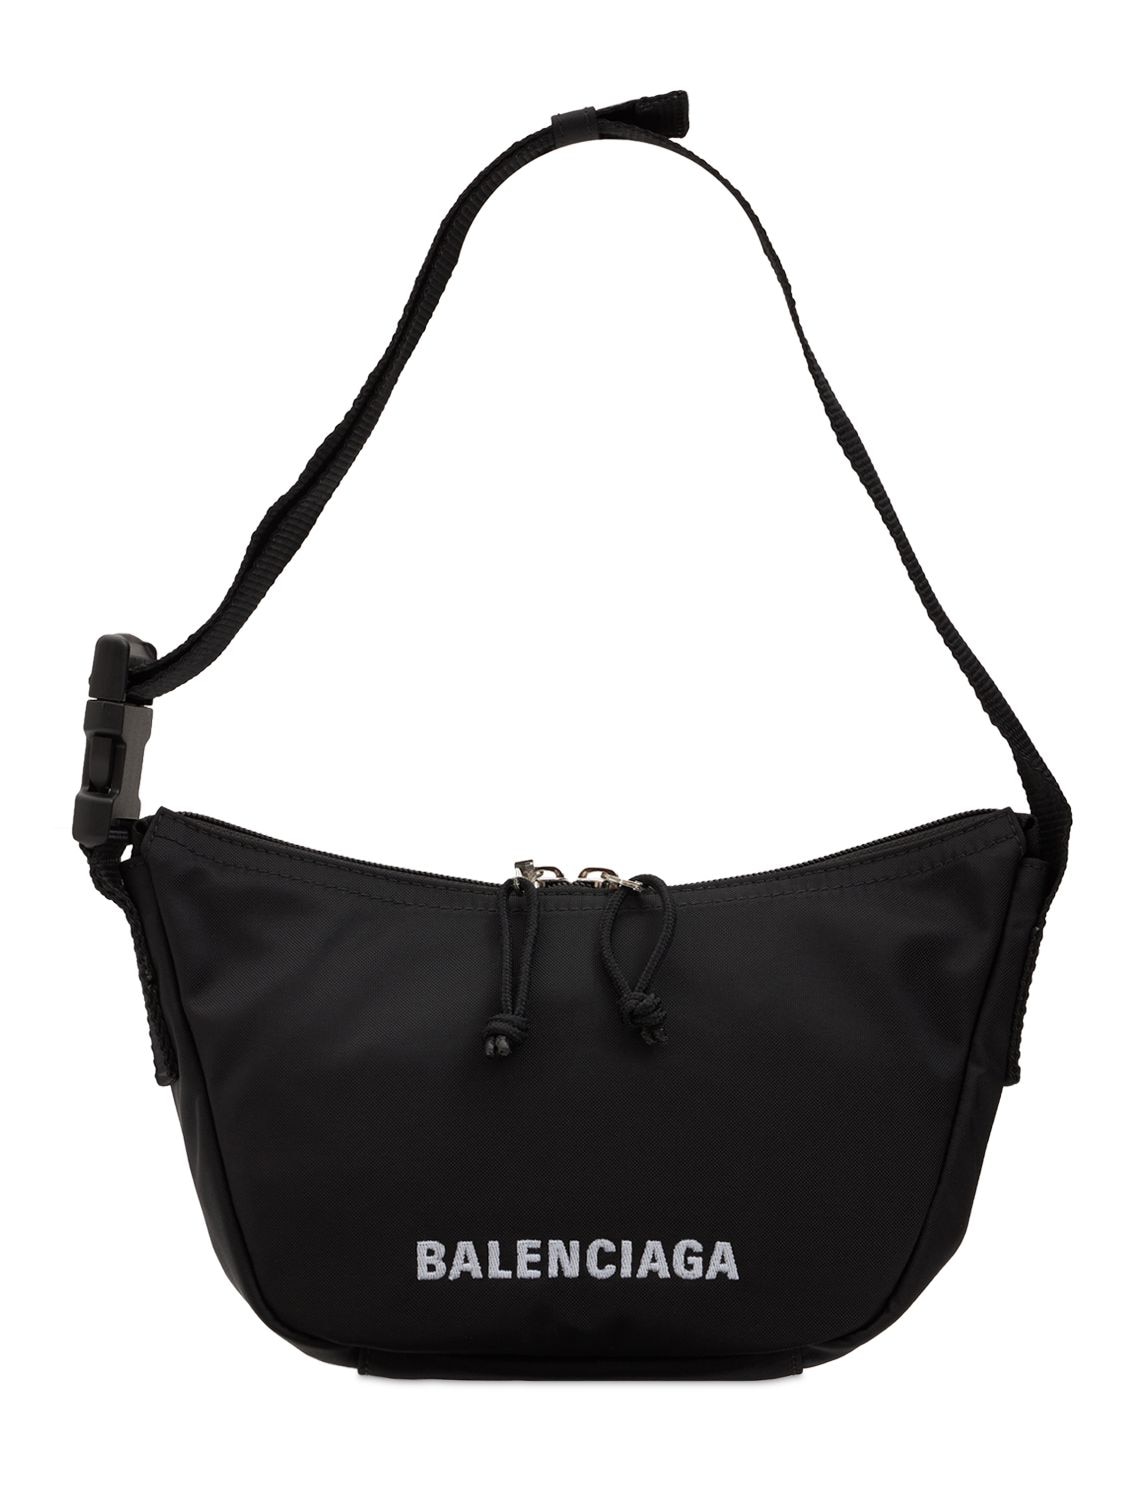 Balenciaga Wheel Sling Bag in Black